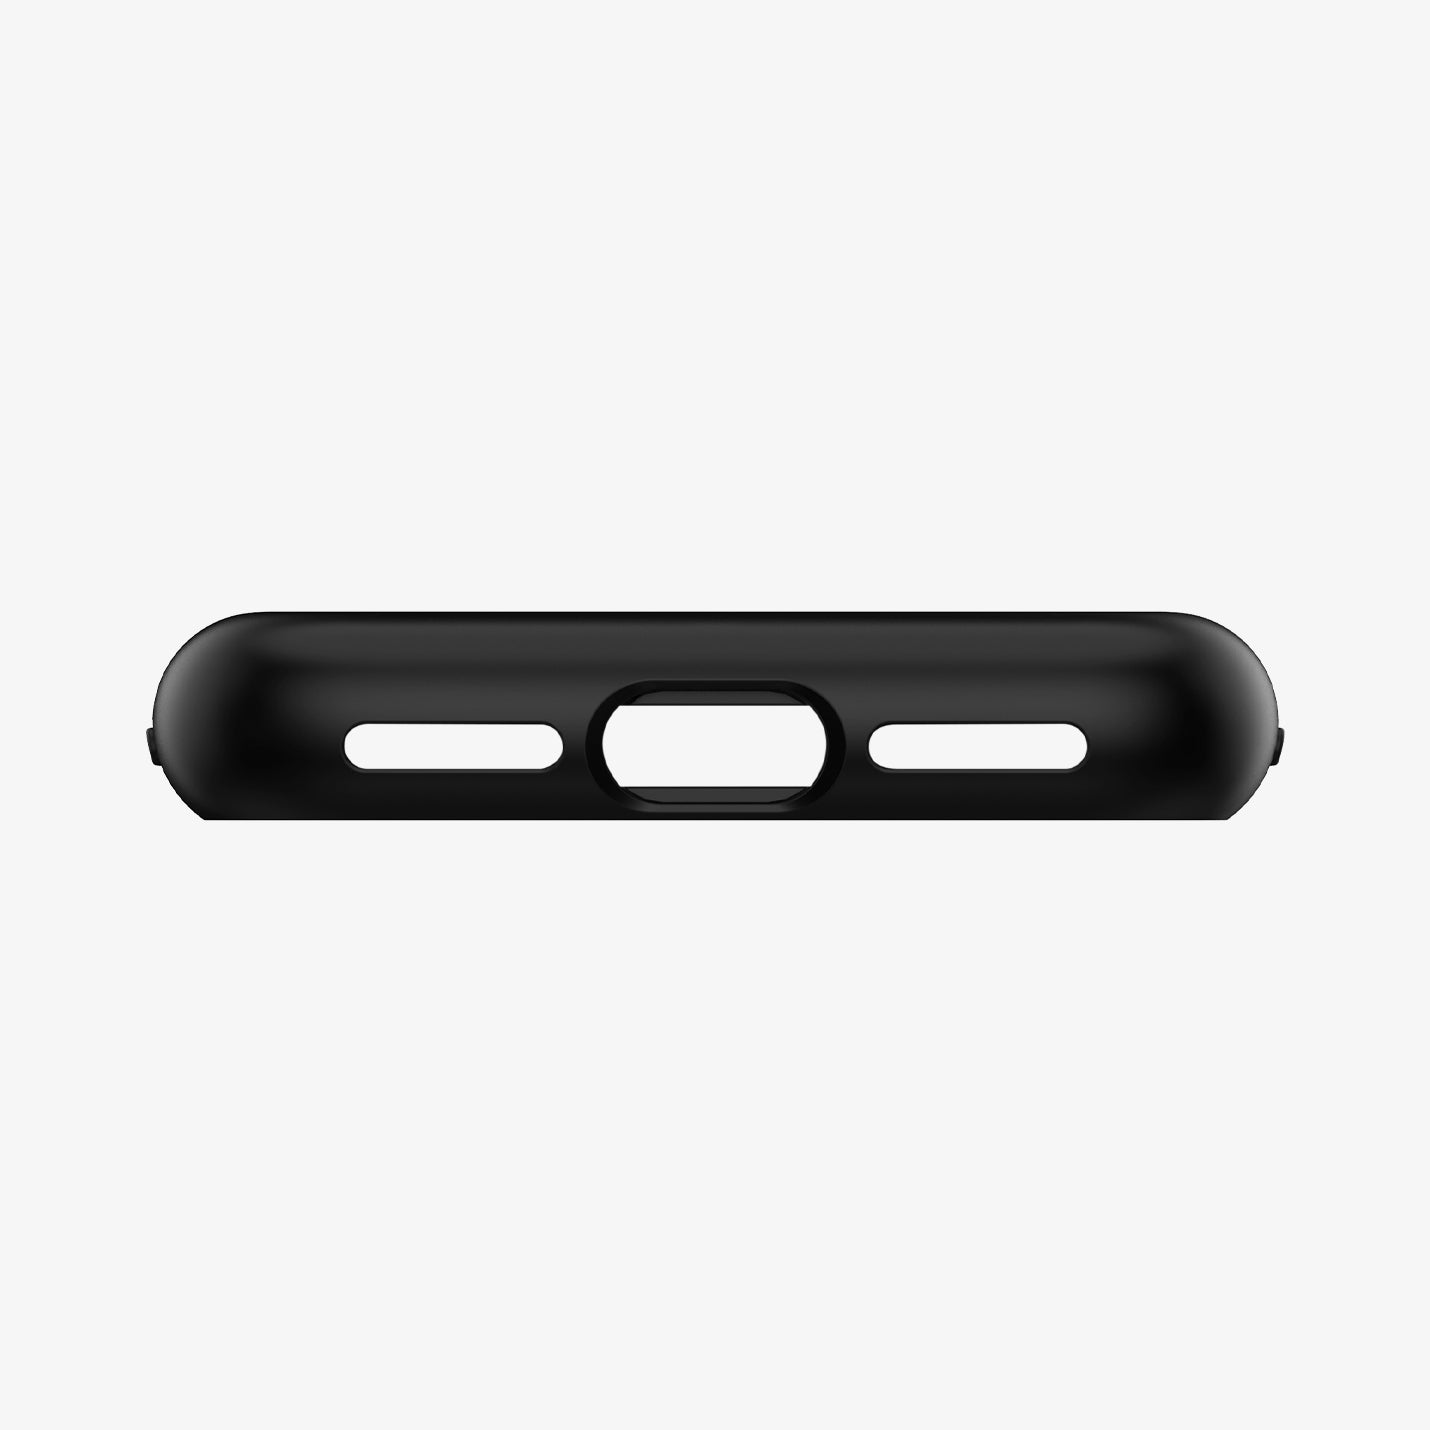 042CS20455 - iPhone SE Slim Armor CS case in black showing the bottom